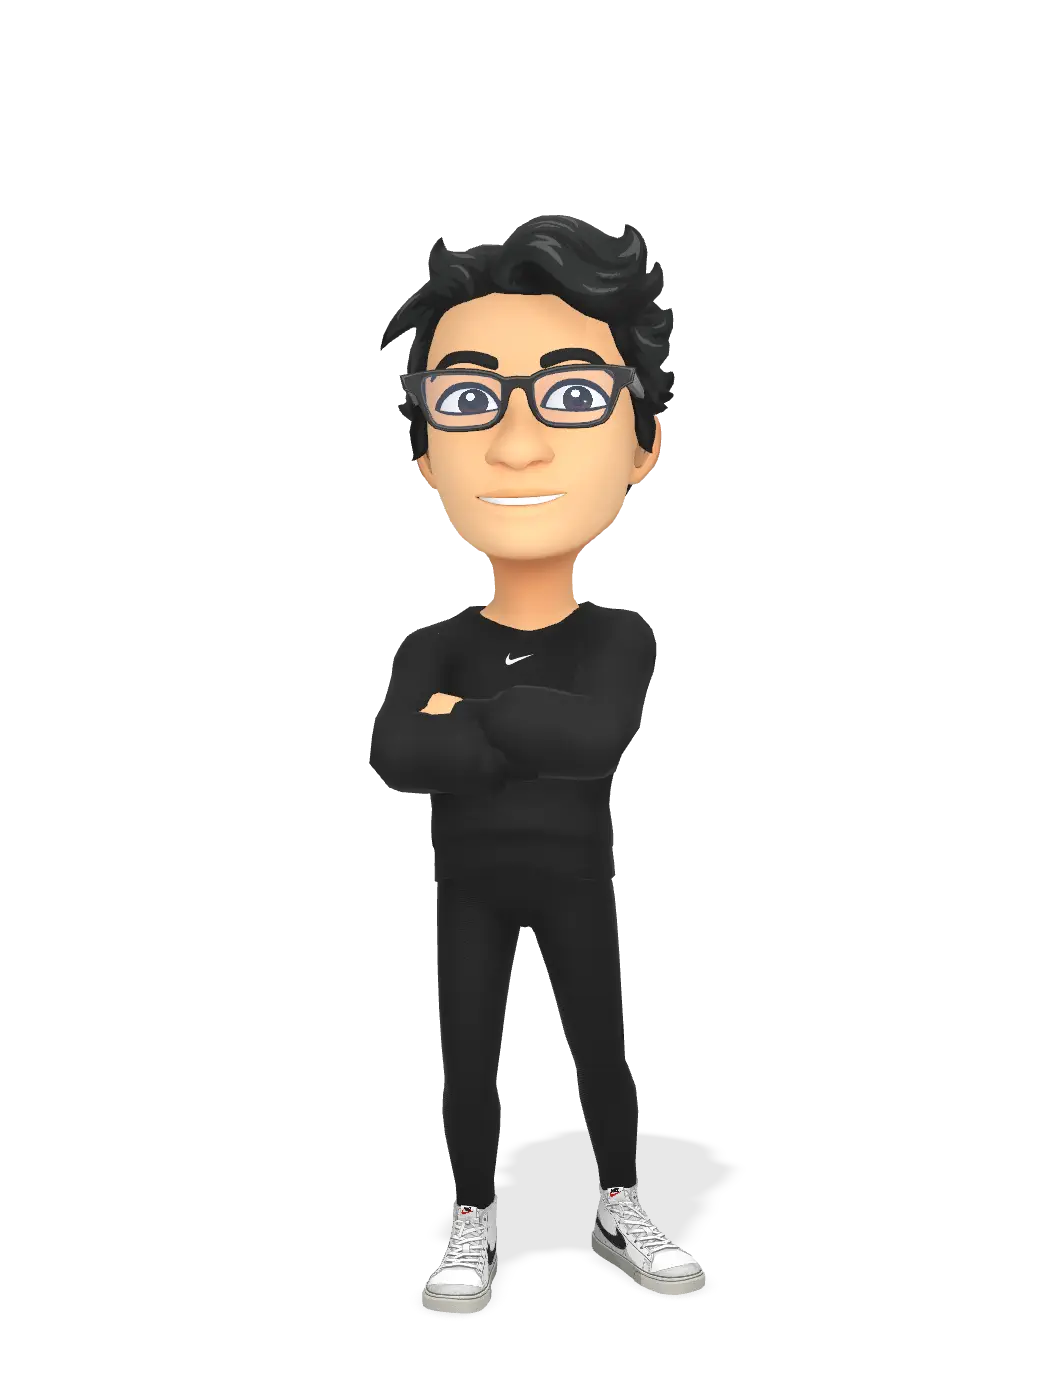 3D Bitmoji for jamesgebara avatar